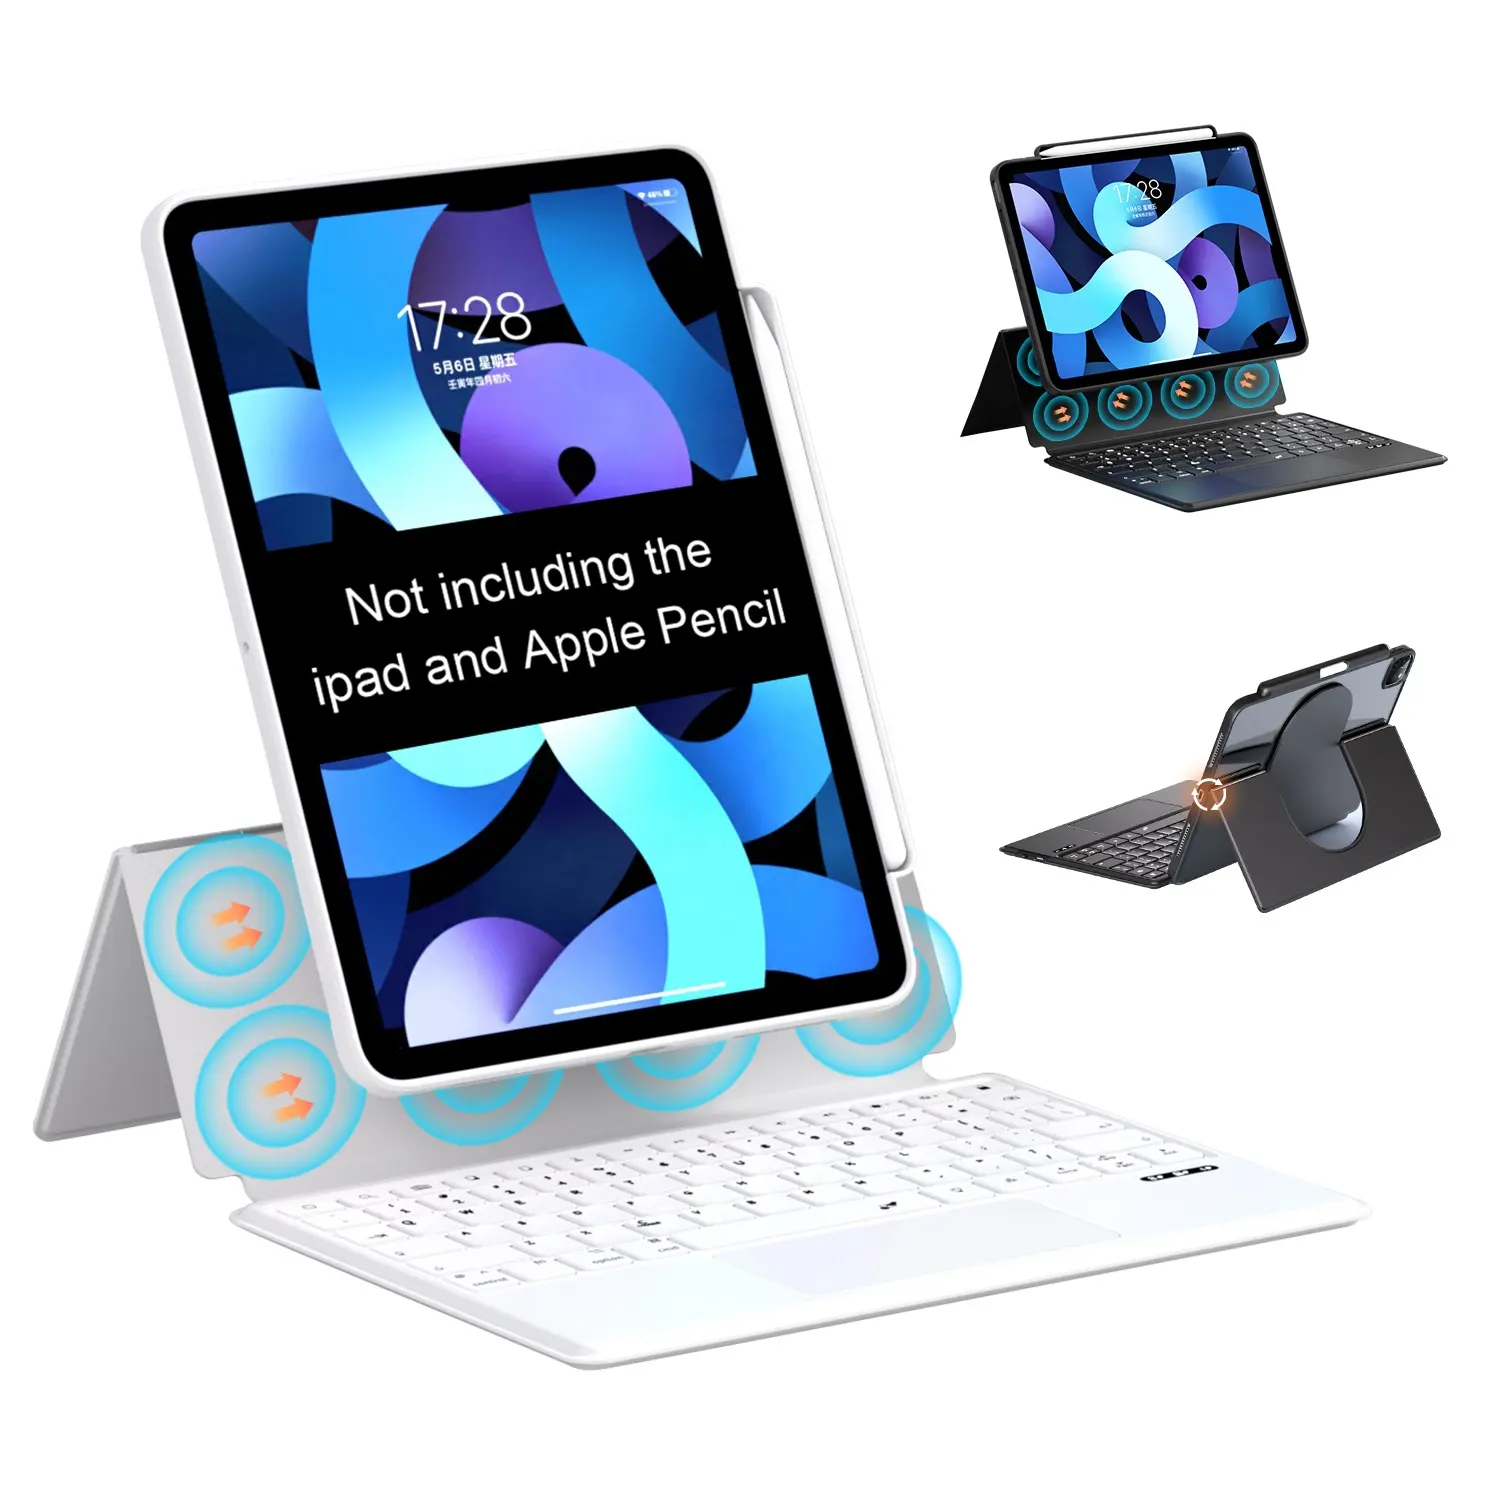 Beste Qualität 2 in 1 Tastaturhülle für iPad Pro 10,9 11 Zoll Hülle abnehmbar kabellos BT Touchpad hintergrundbeleuchtung für iPad Tastaturhülle